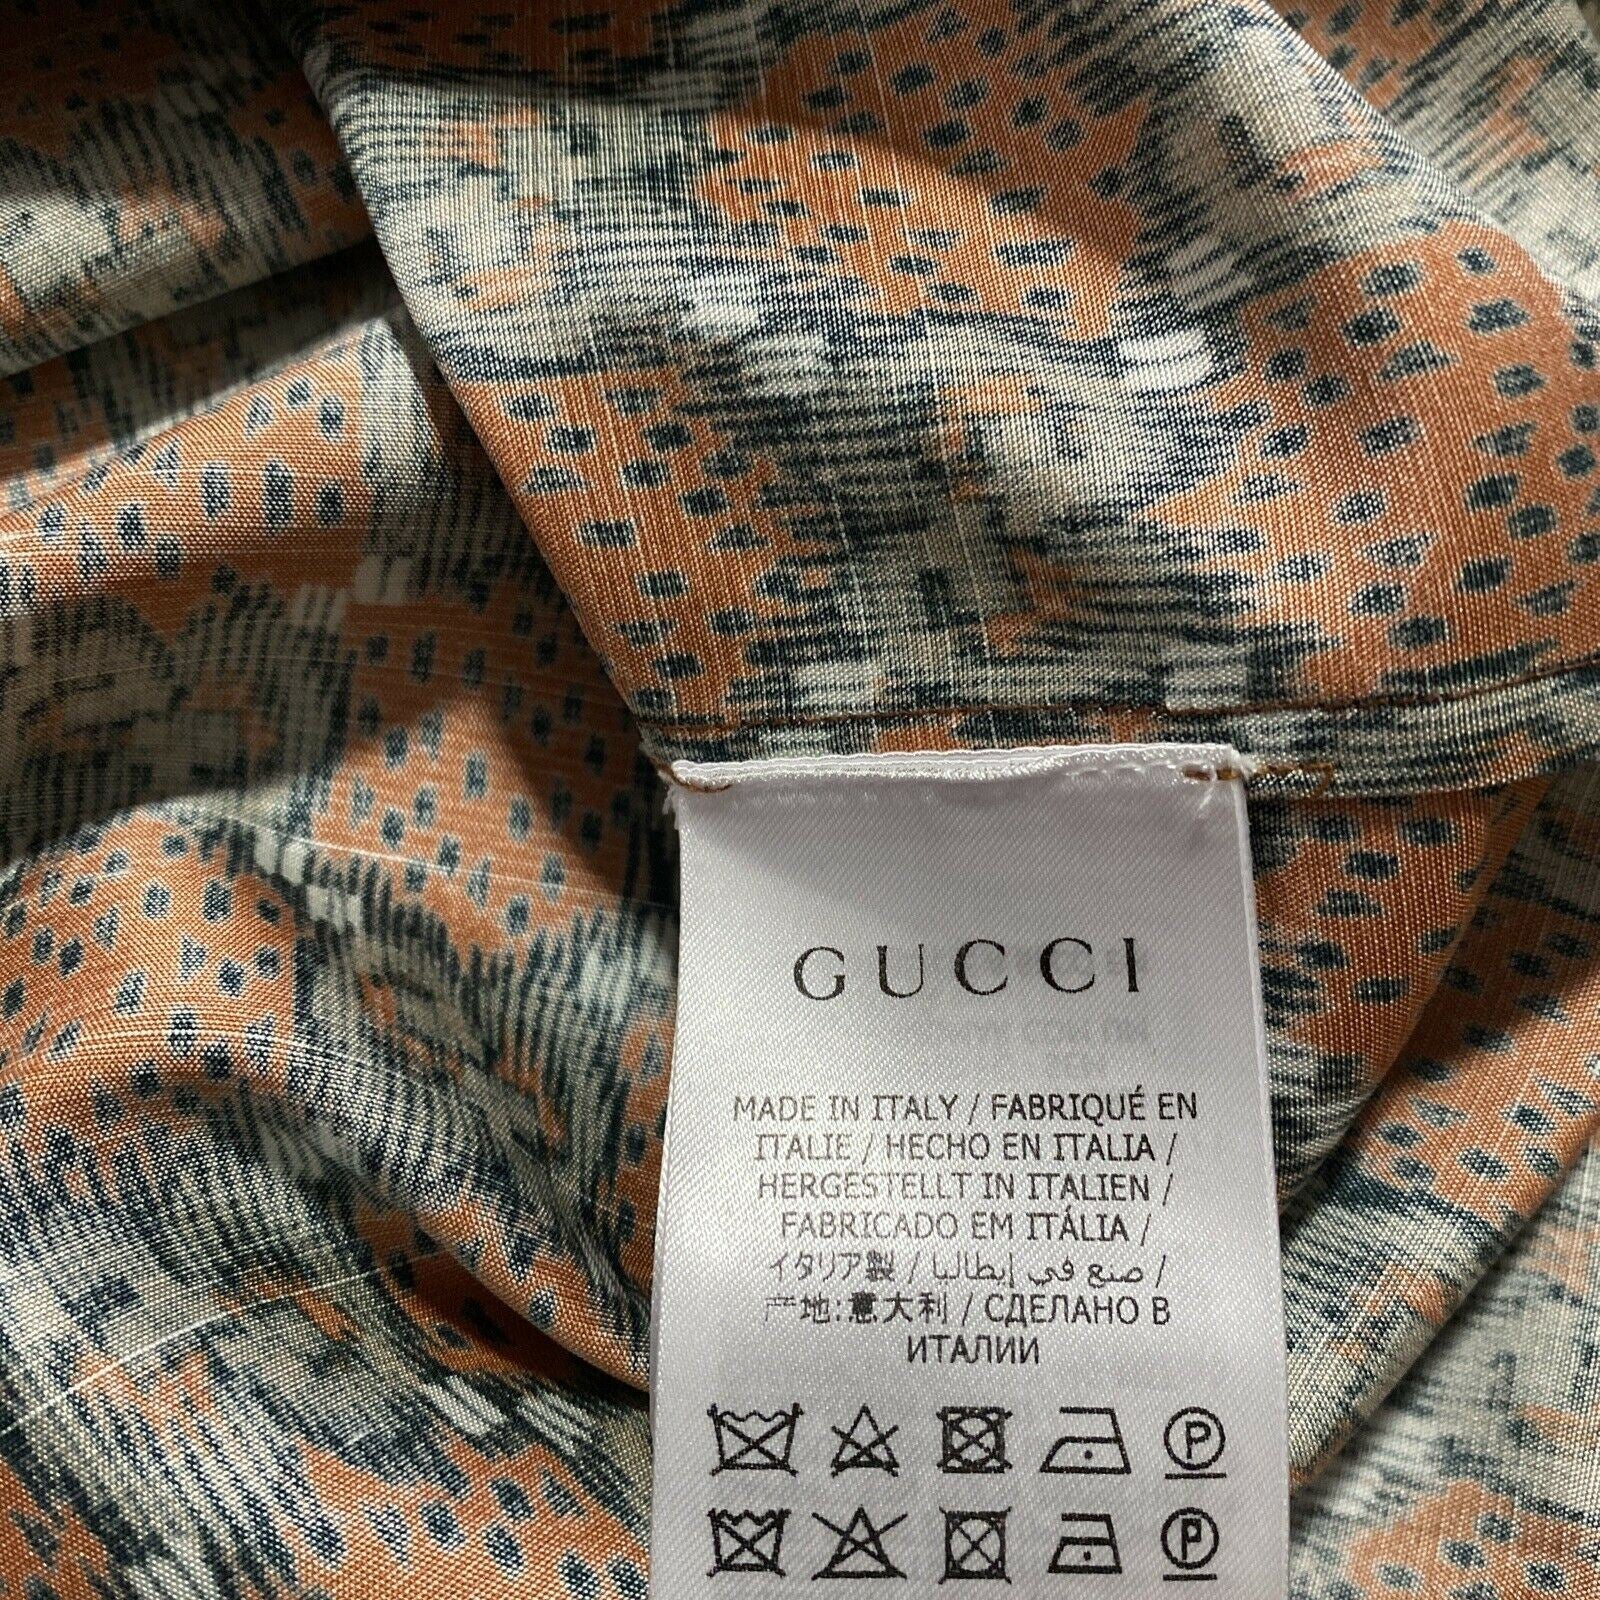 New $1850 Gucci Men’s Silk GG Monogram Bowling Lose Shirt Beige/Orange XL